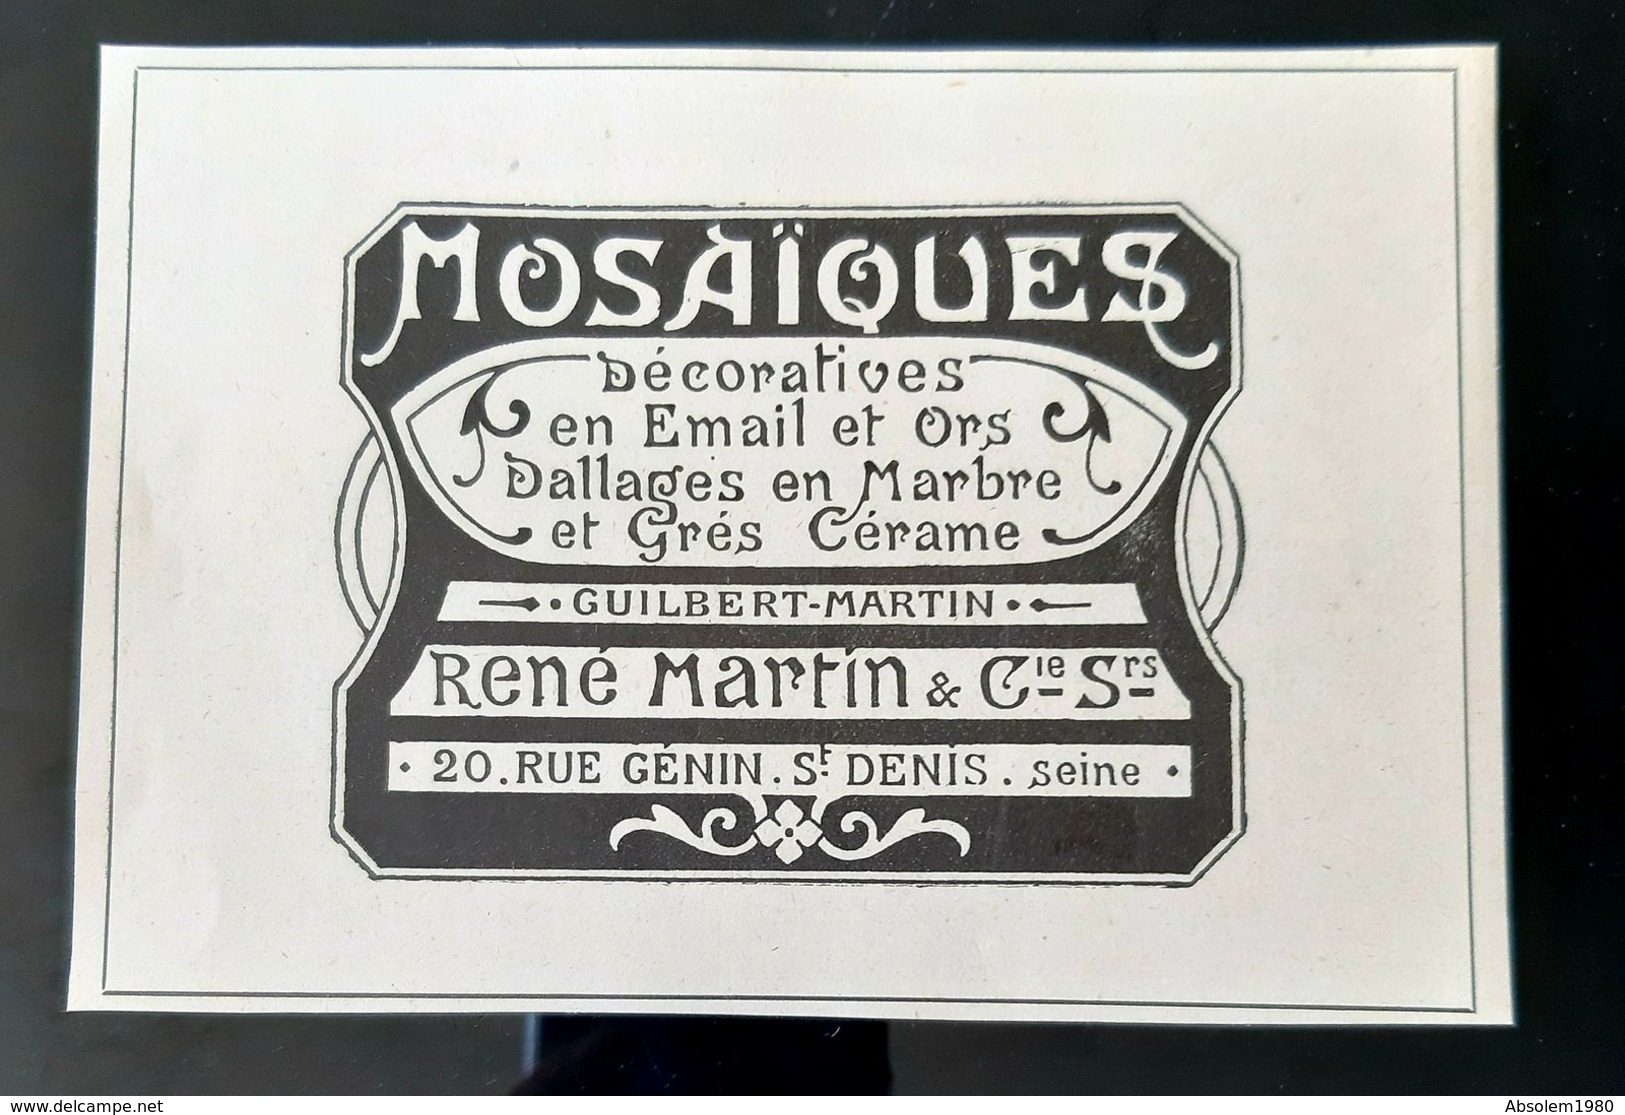 MOSAIQUES DECORATIVES RENE GUILBERT MARTIN EMAIL GRES CERAME ART NOUVEAU PUBLICITE 1900 ADVERTISING JUGENDSTIL MOSAIC - Publicidad